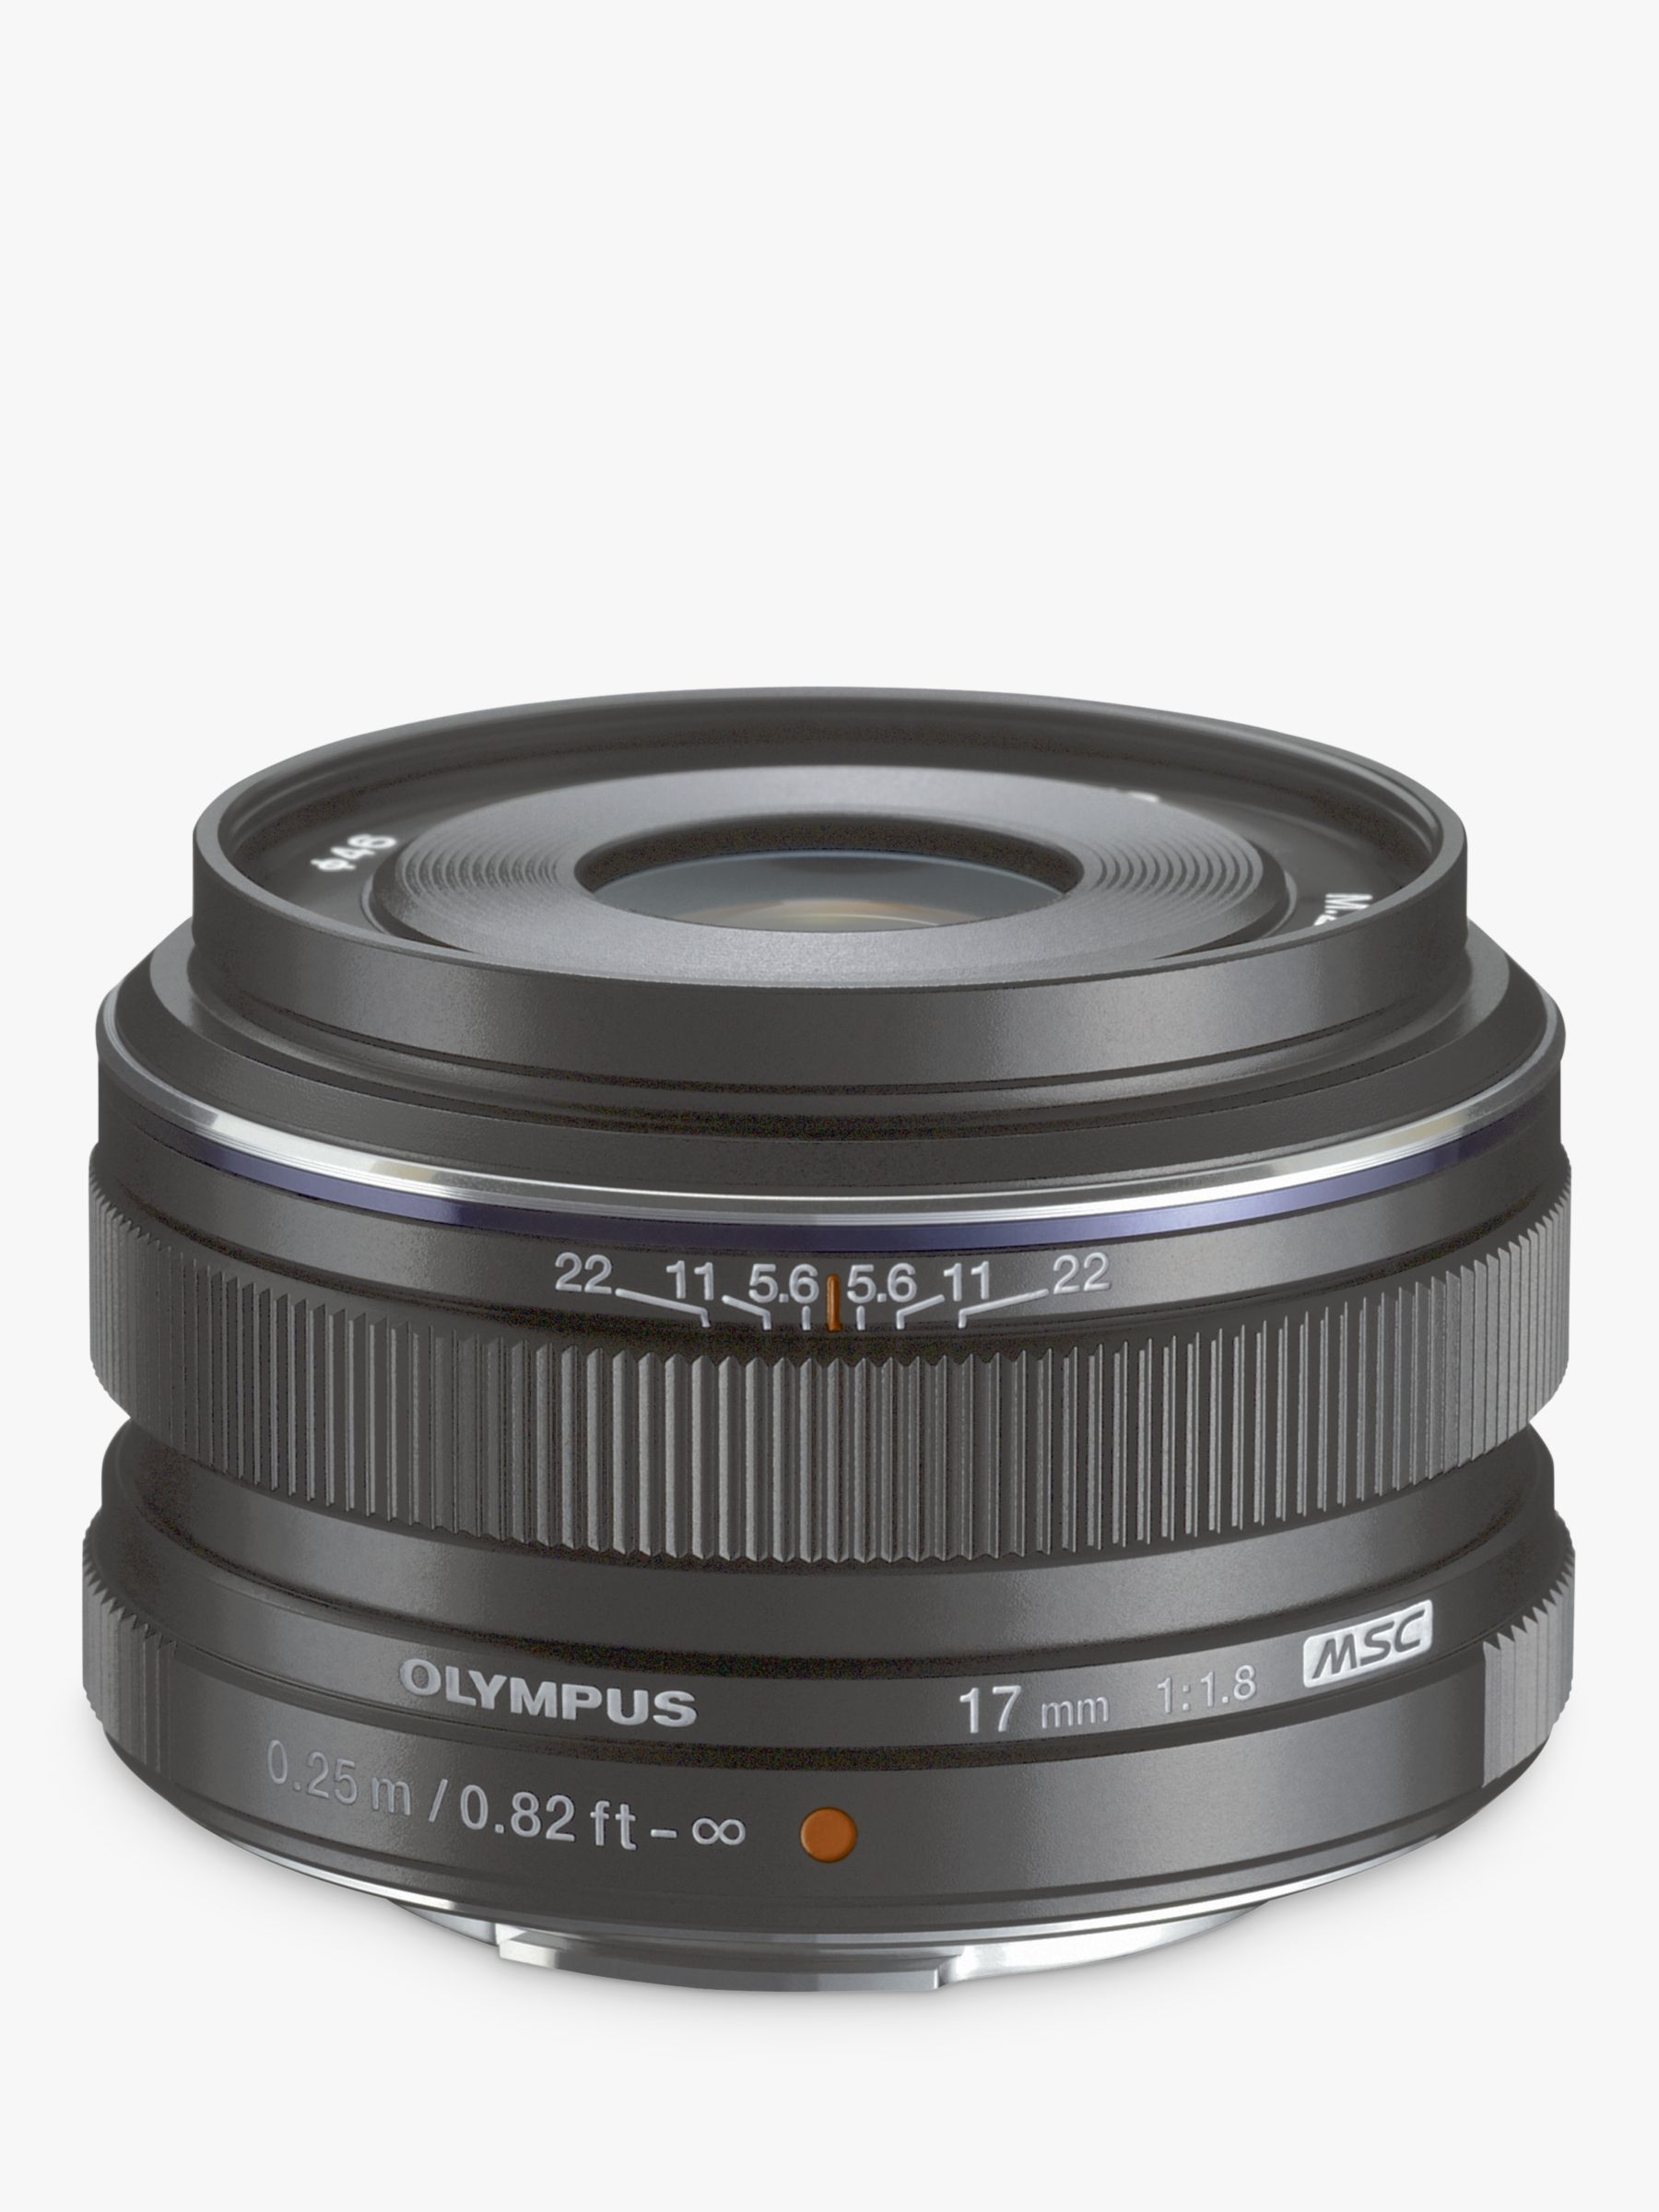 Olympus M.ZUIKO Digital 17mm f1.8 Compact Wide Angle Lens, Black